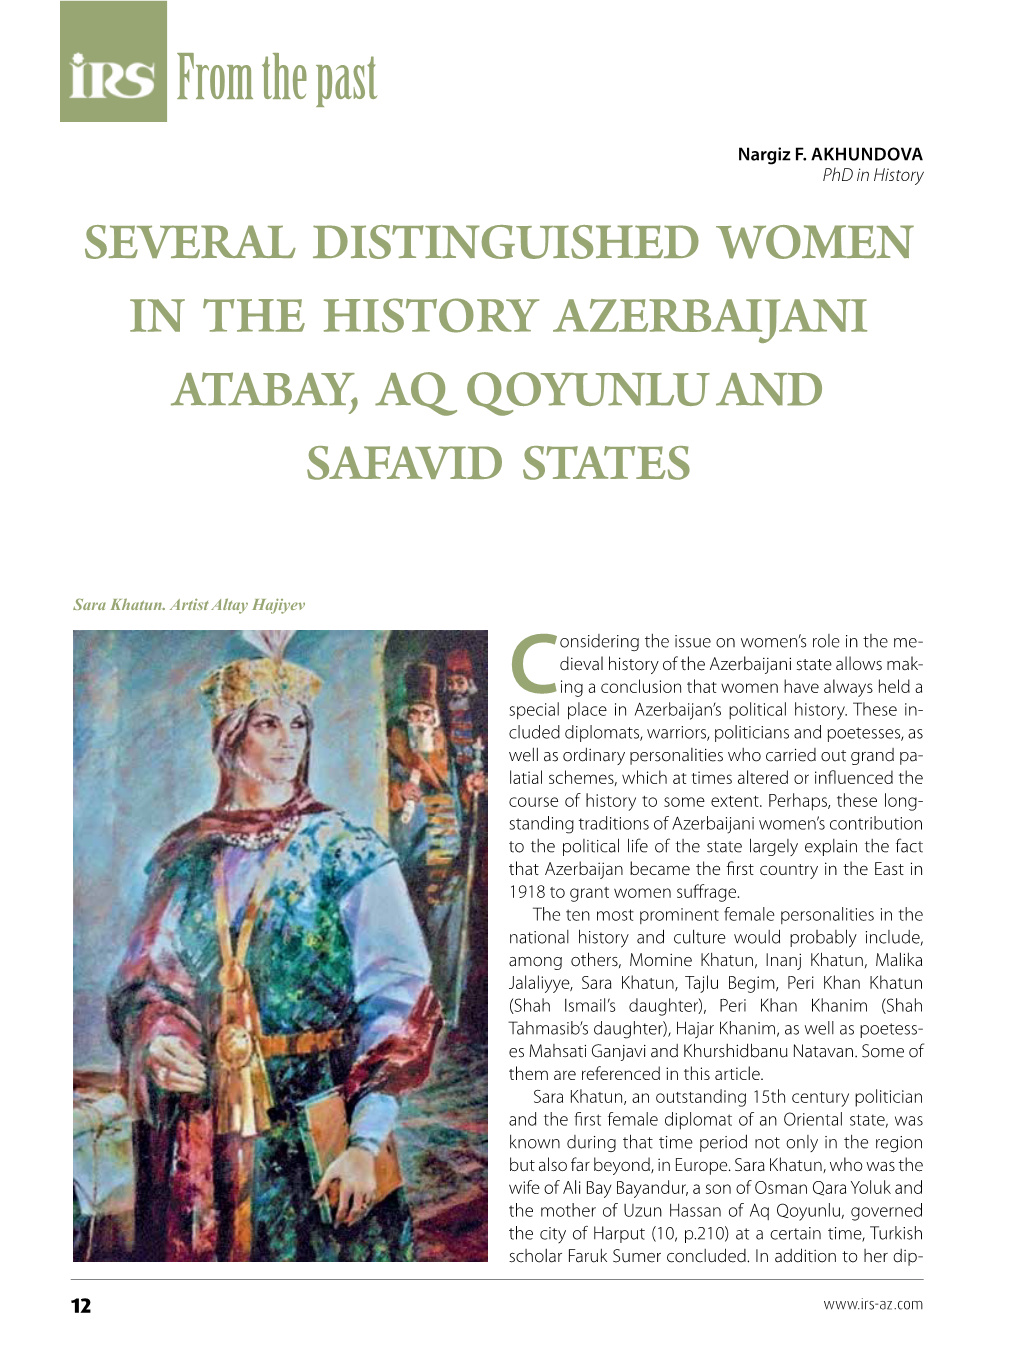 Several Distinguished Women in the History Azerbaijani Atabay, Aq Qoyunlu and Safavid States